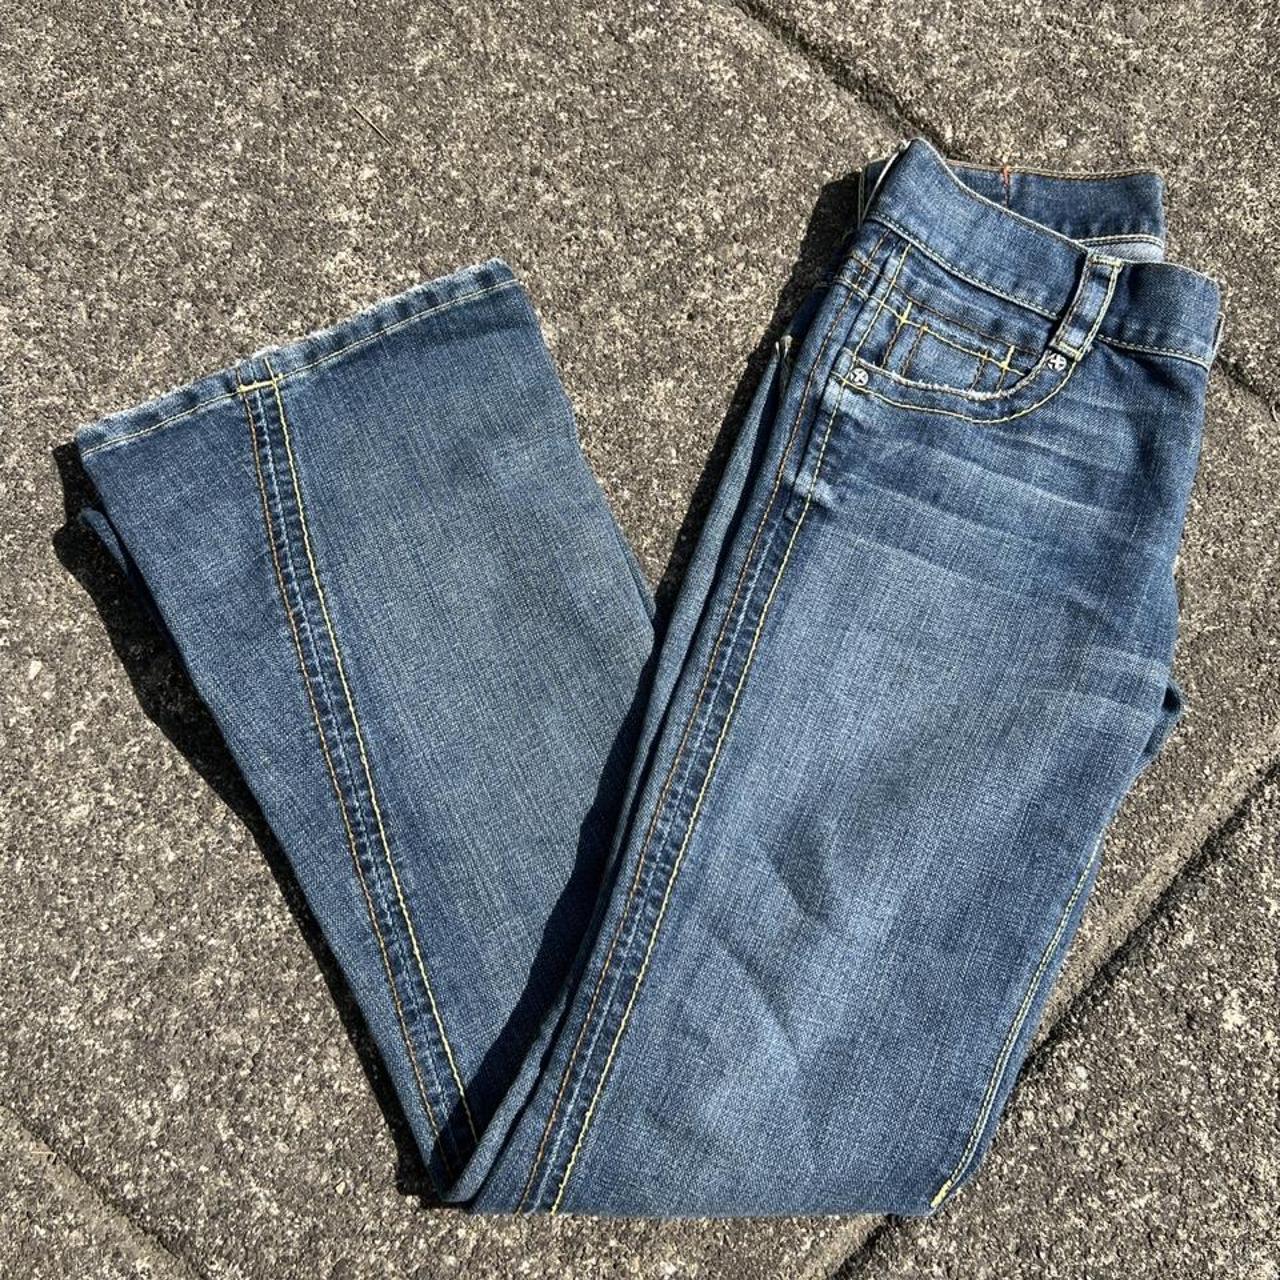 Tag jeans contrast stitch button flap rear pocket... - Depop